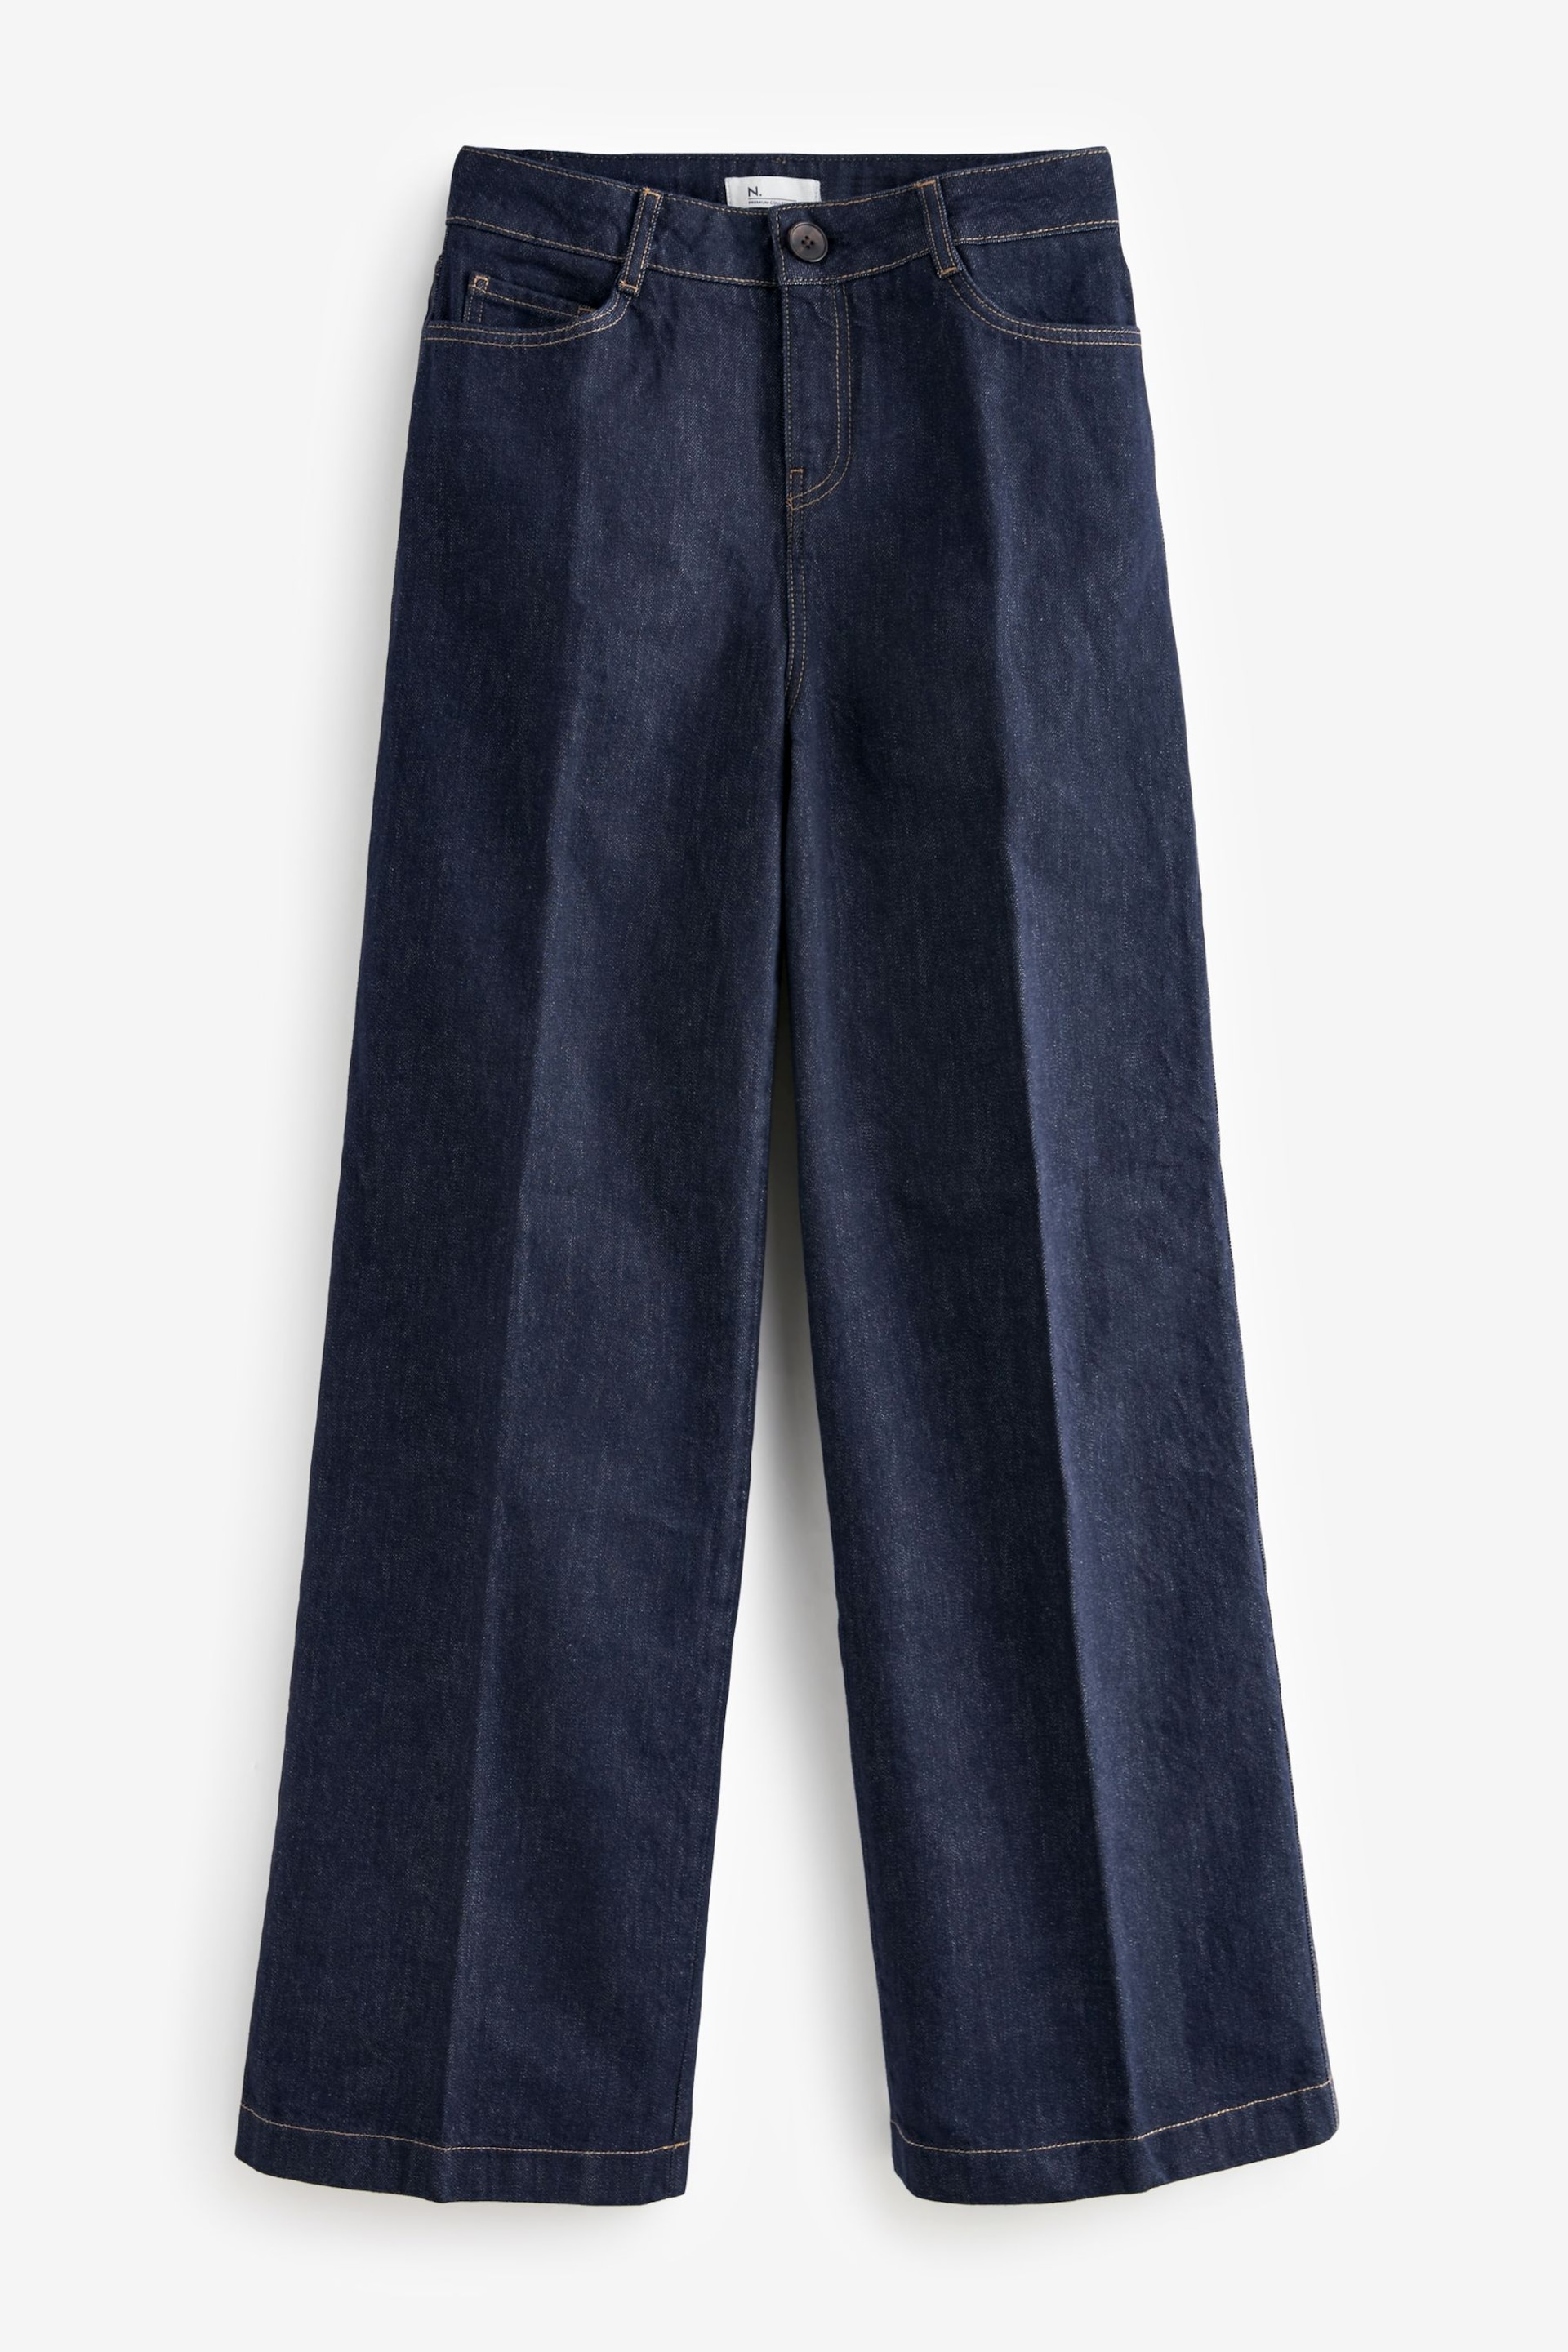 Denim Rinse Blue Premium Wide Leg Jeans - Image 2 of 6